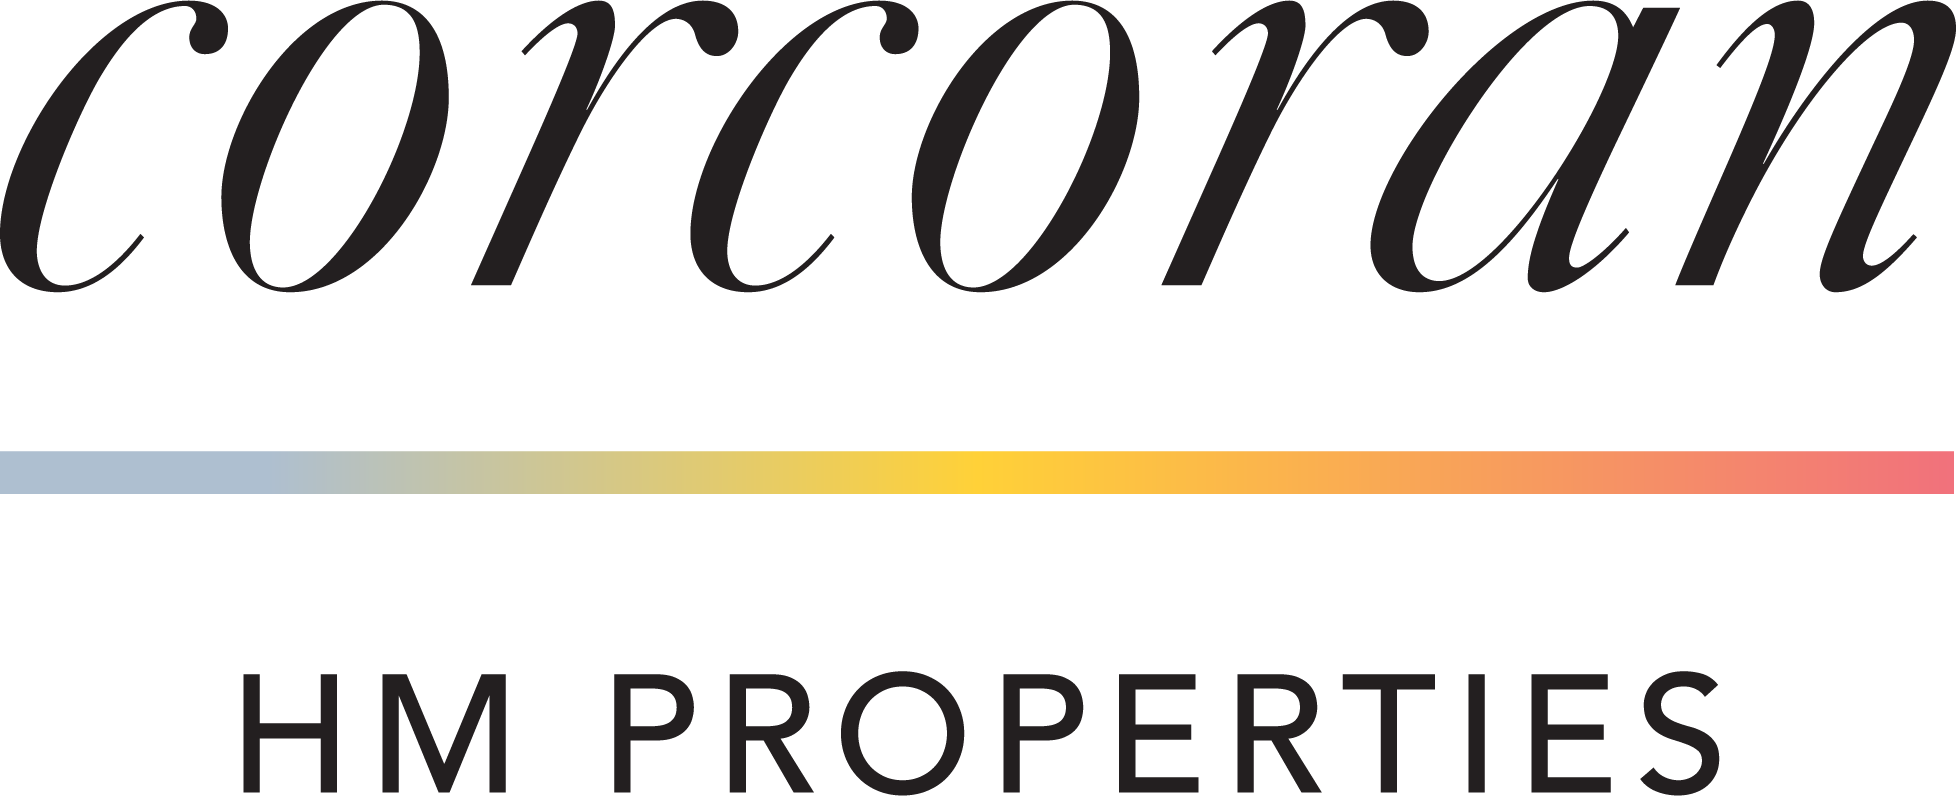 Corcoran HM Properties logo